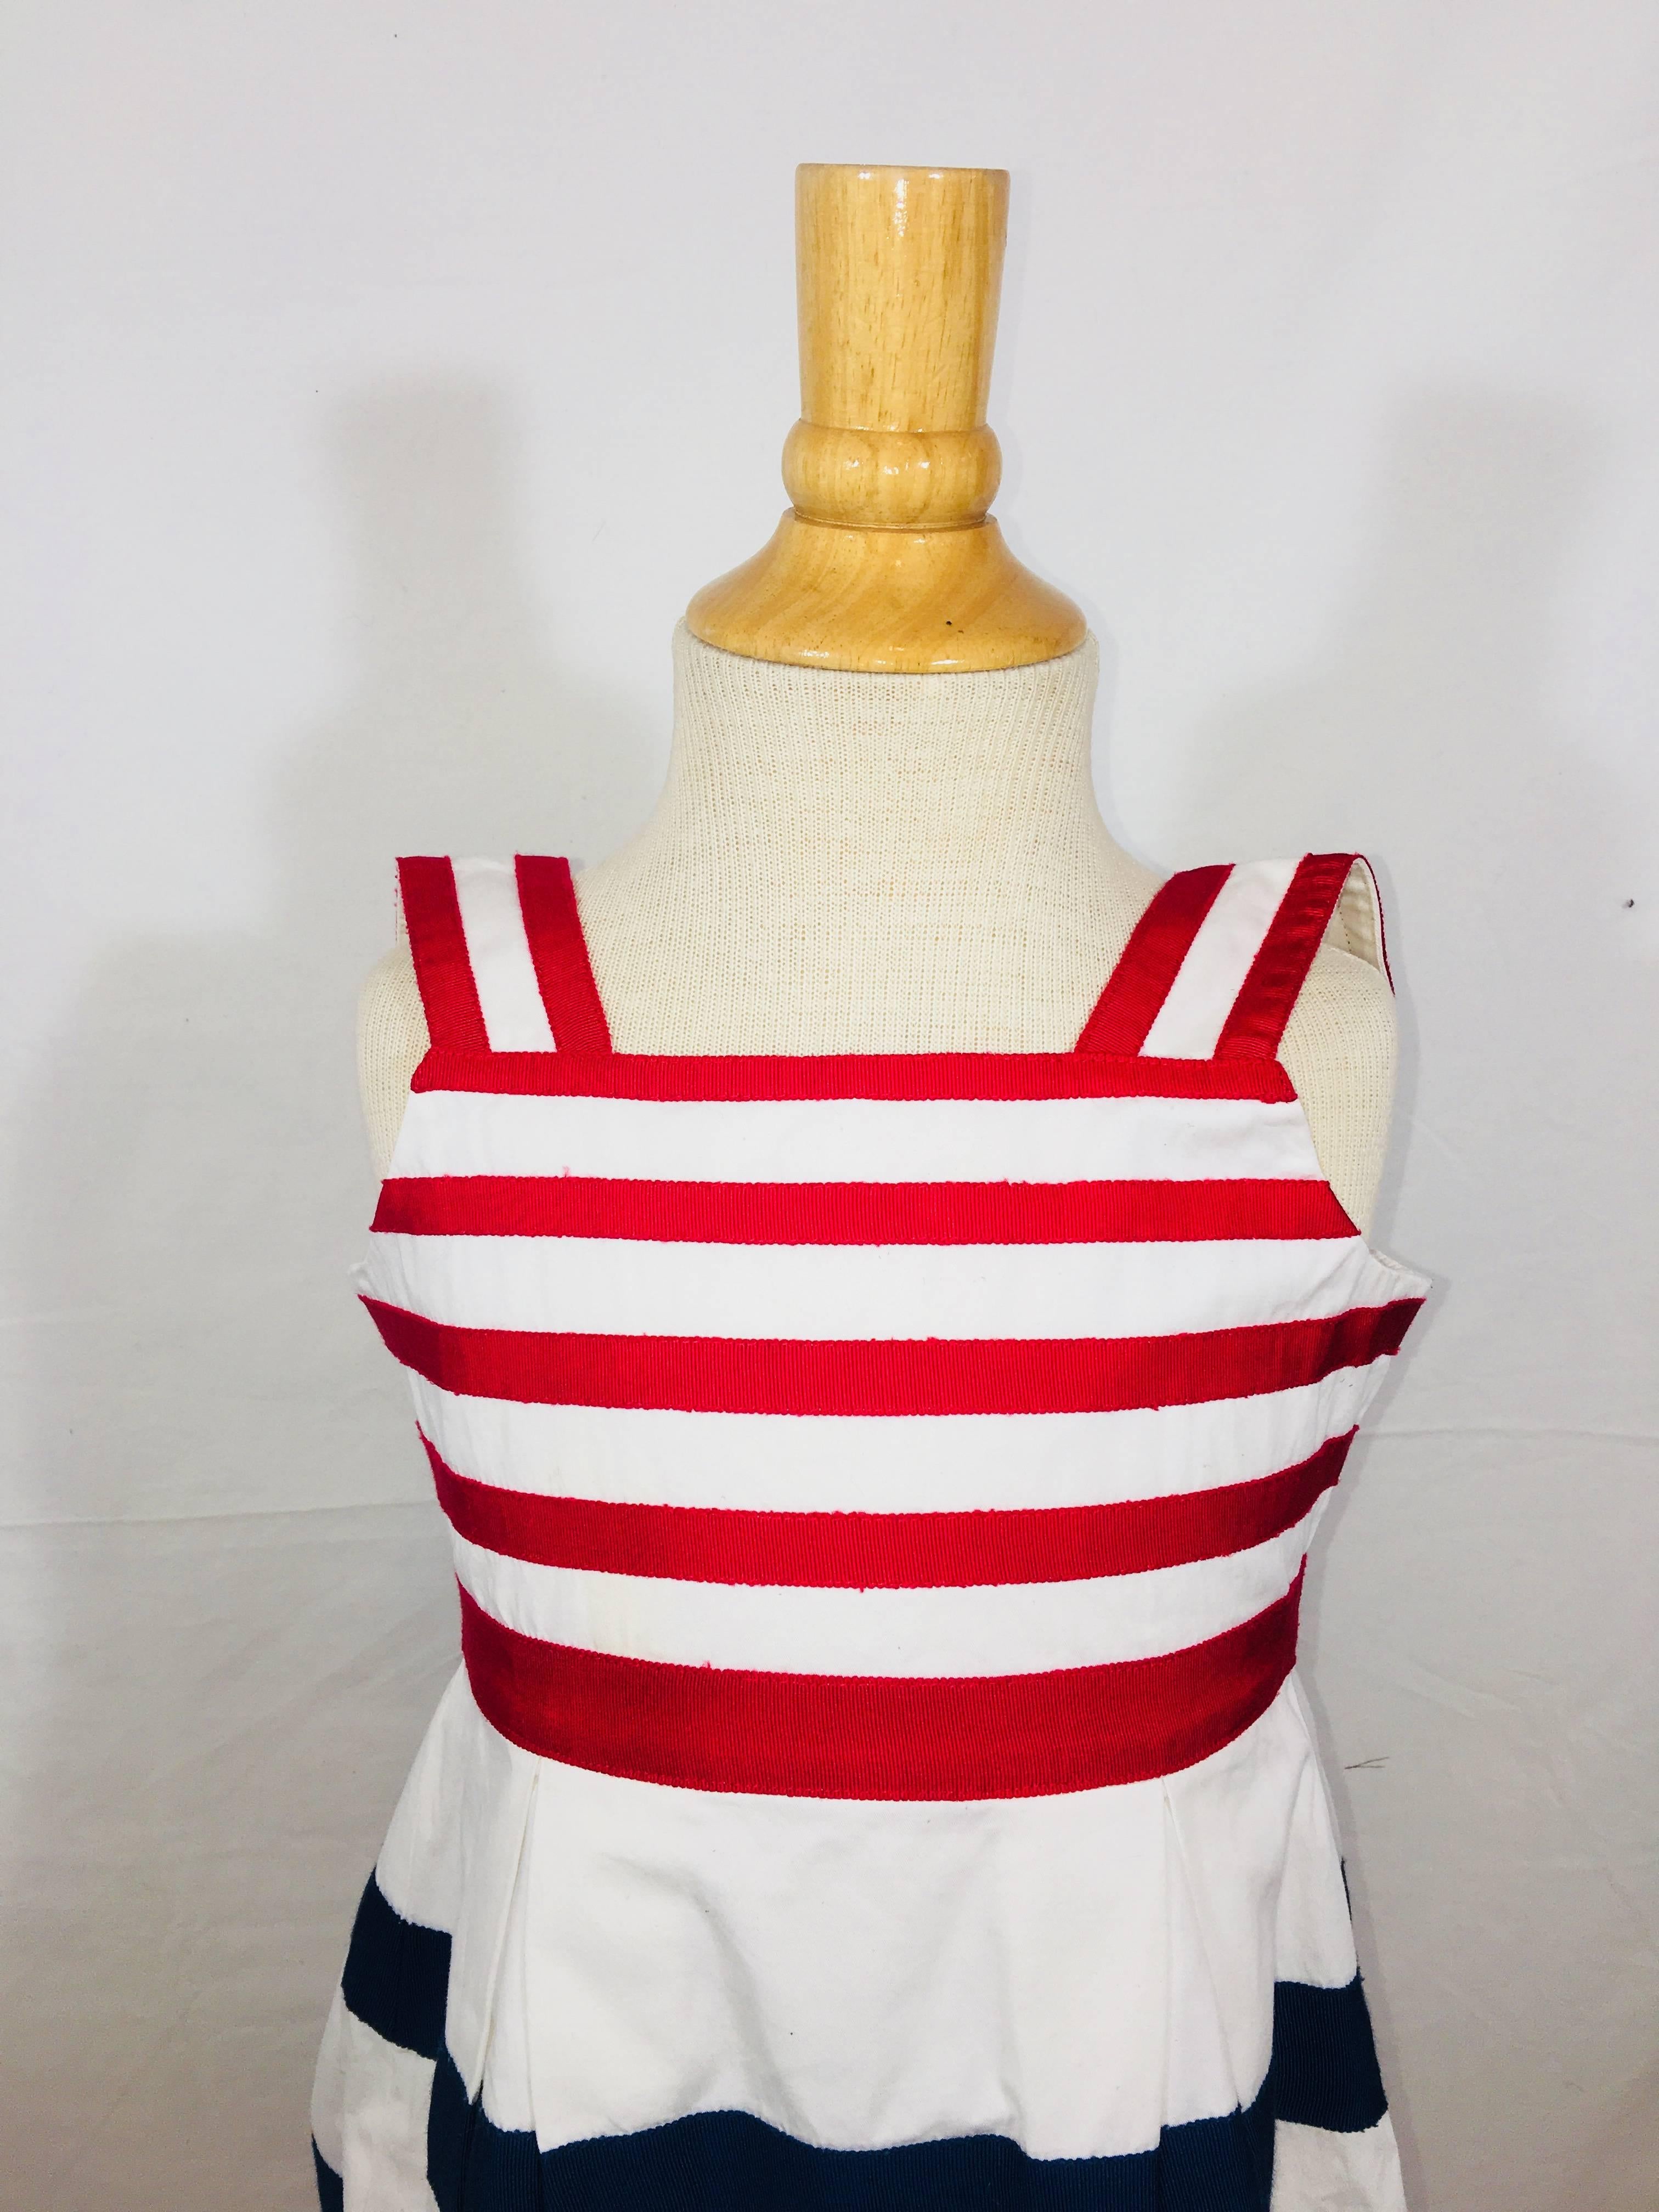 Kids Oscar de la Renta Sleeveless Dress. Red White and Blue Striped with Flare Bottom.